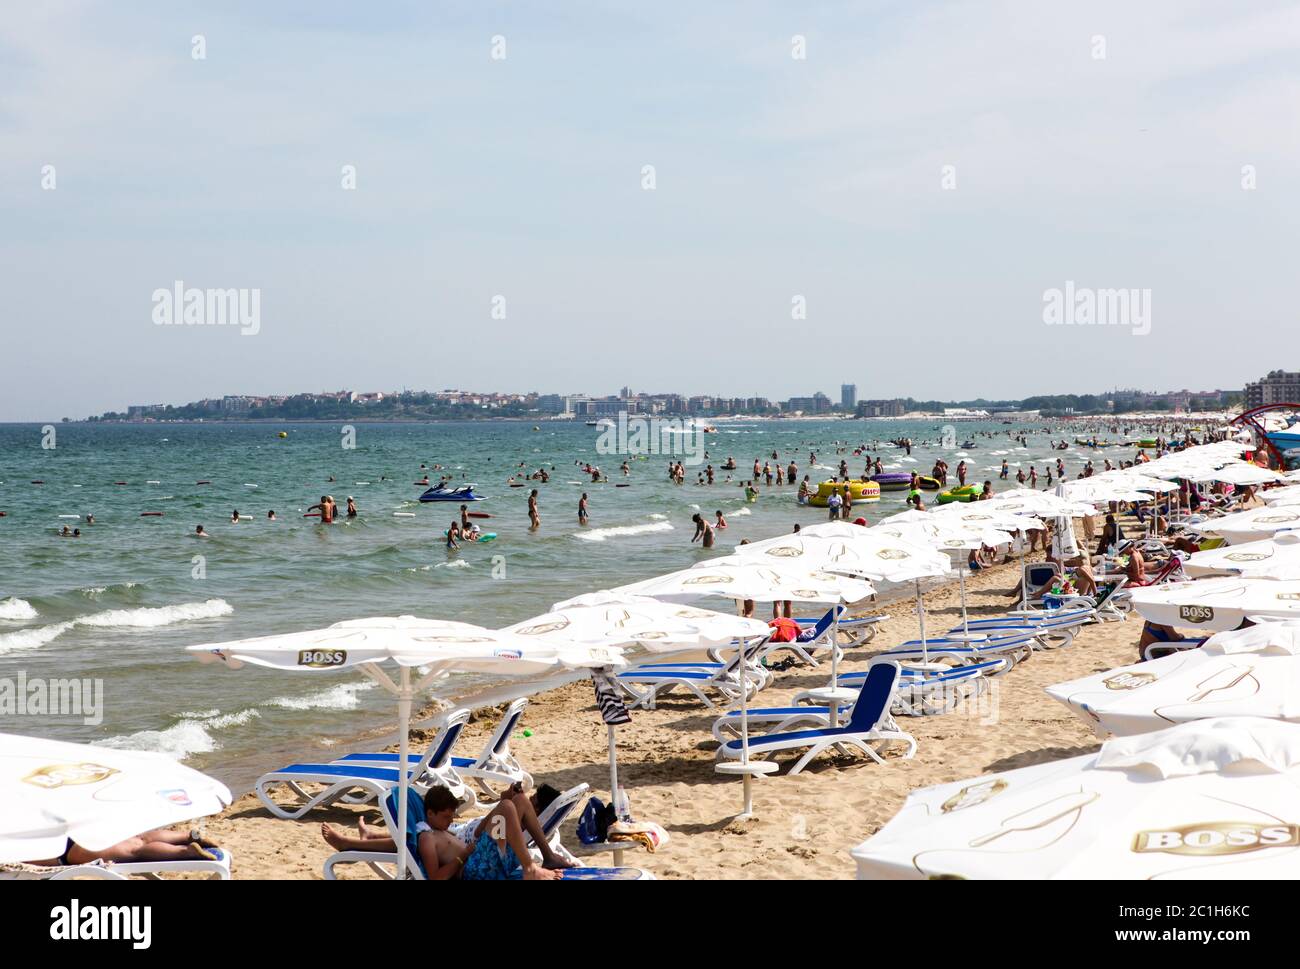 SUNNY BEACH, Bulgaria - June 26, 2018: Sunny Beach is a major seaside resort on the Black Sea coast of Bulgaria, located approxi Stock Photo